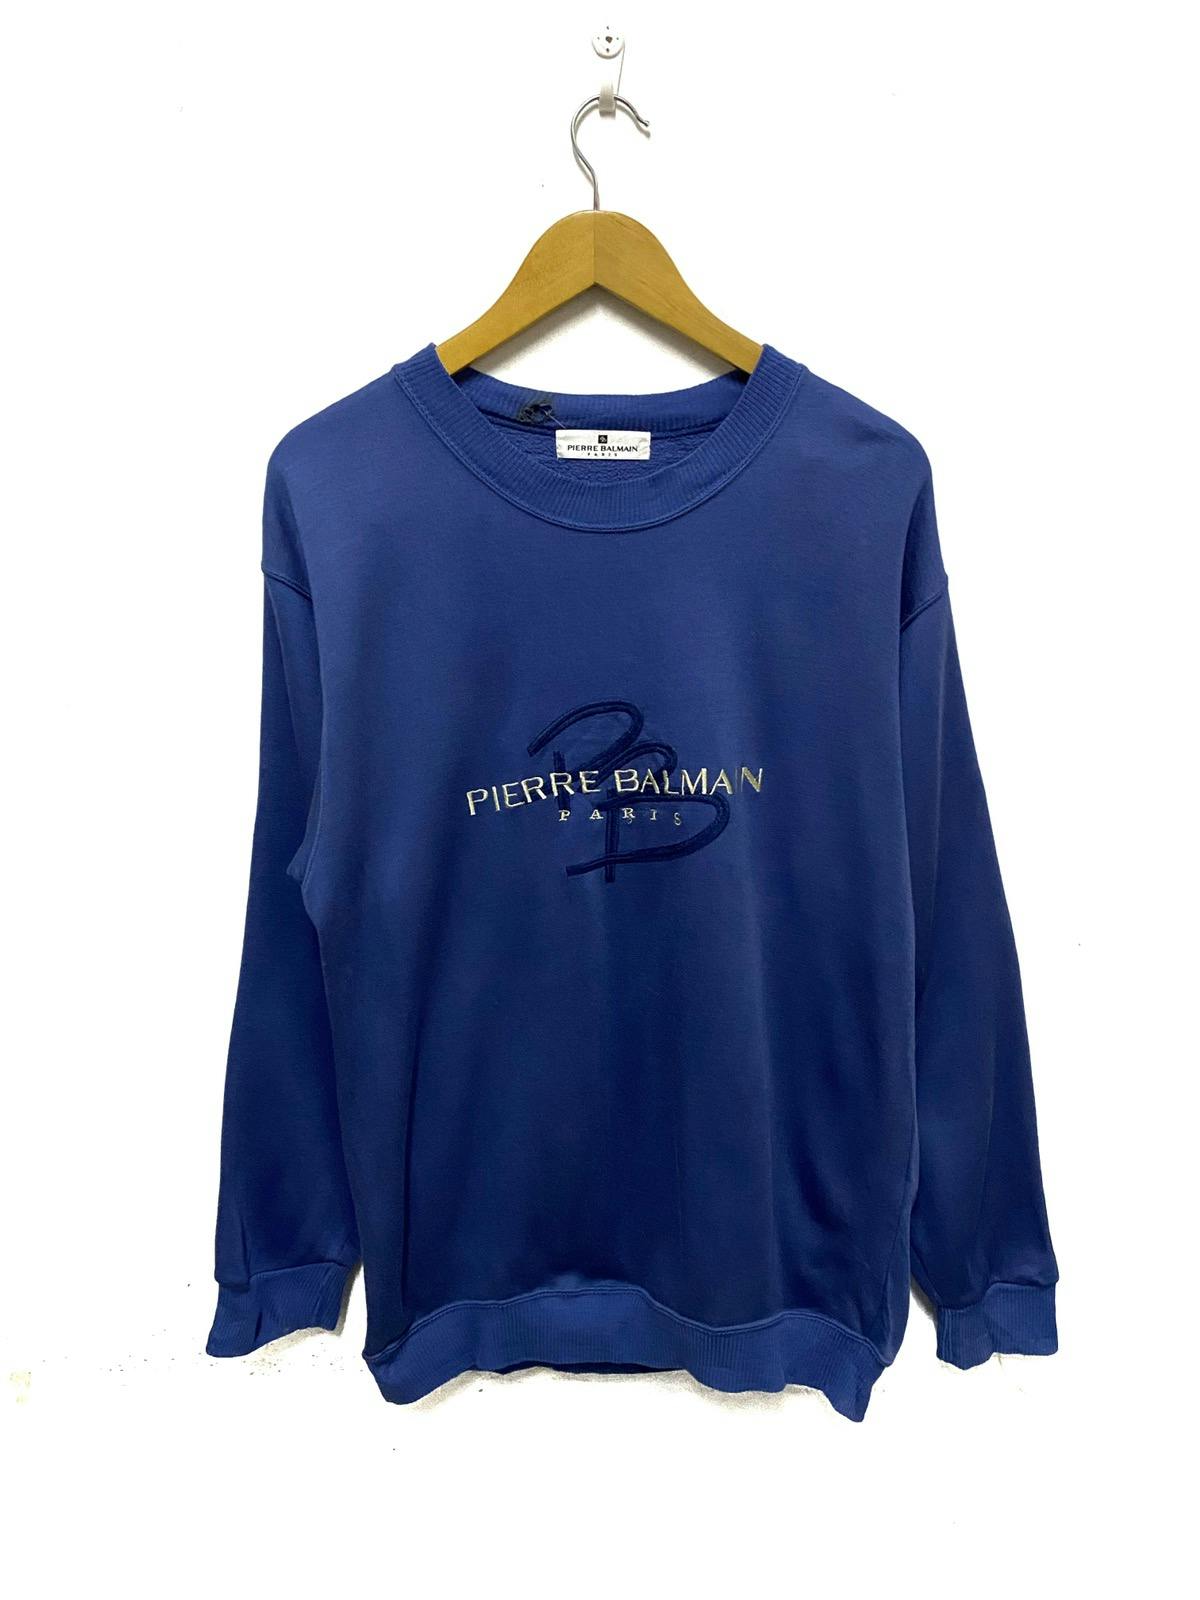 Vintage Pierre Balmain Sweatshirt - 1